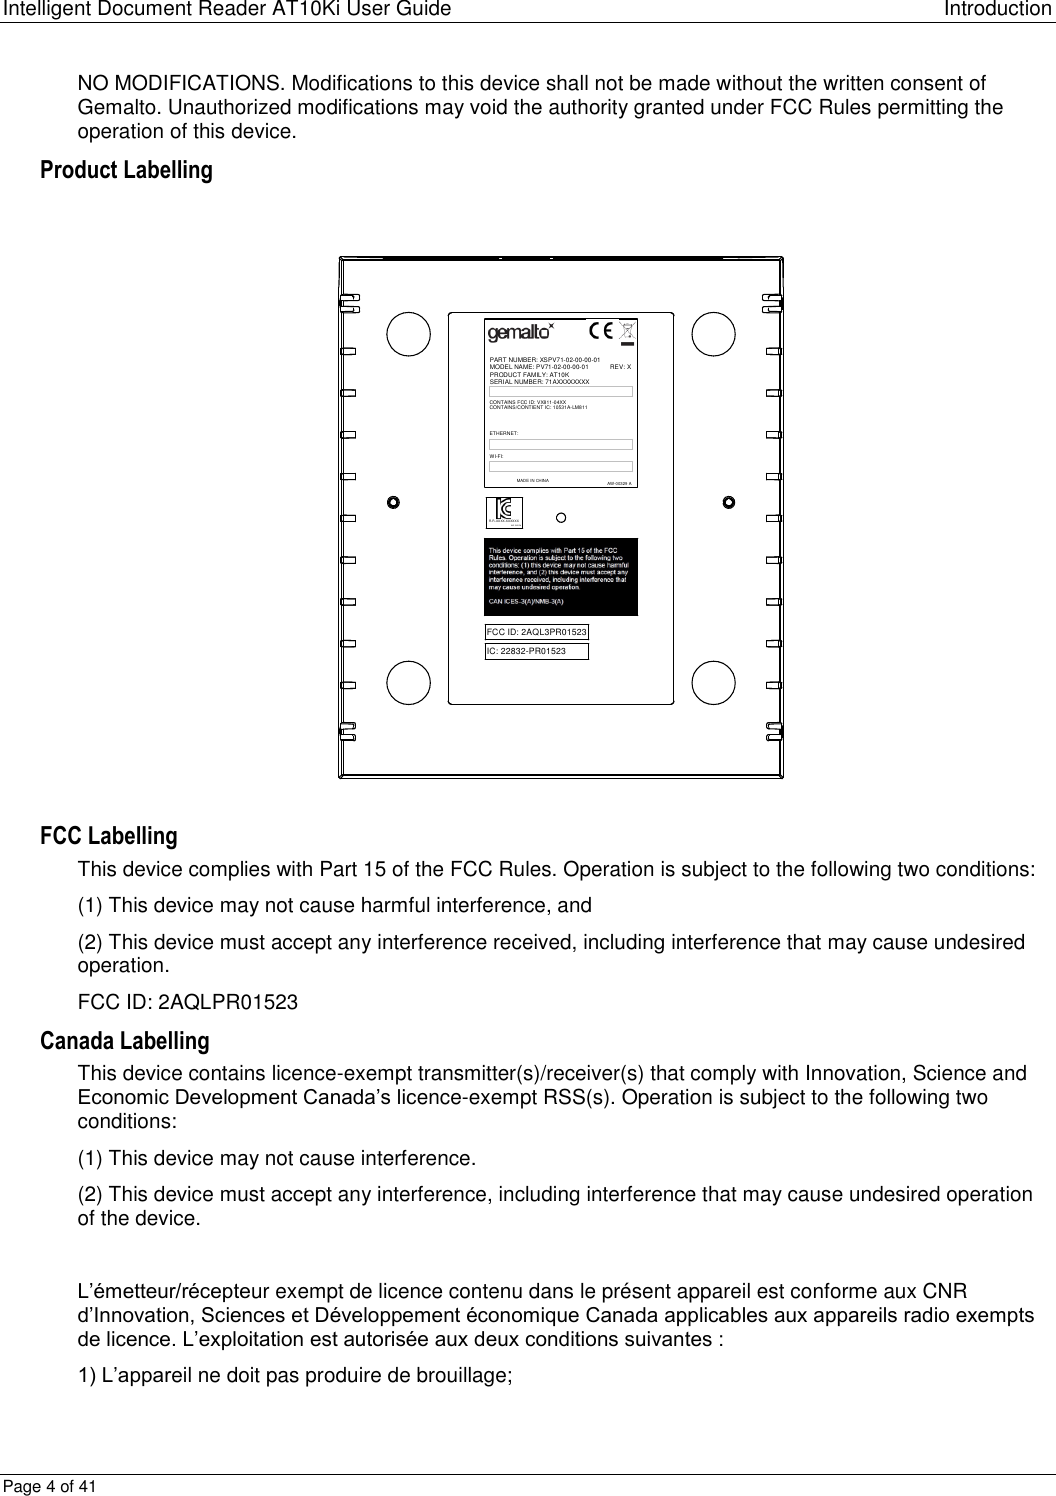 Page 4 of Thales DIS USA PR01523 ation Scanner User Manual